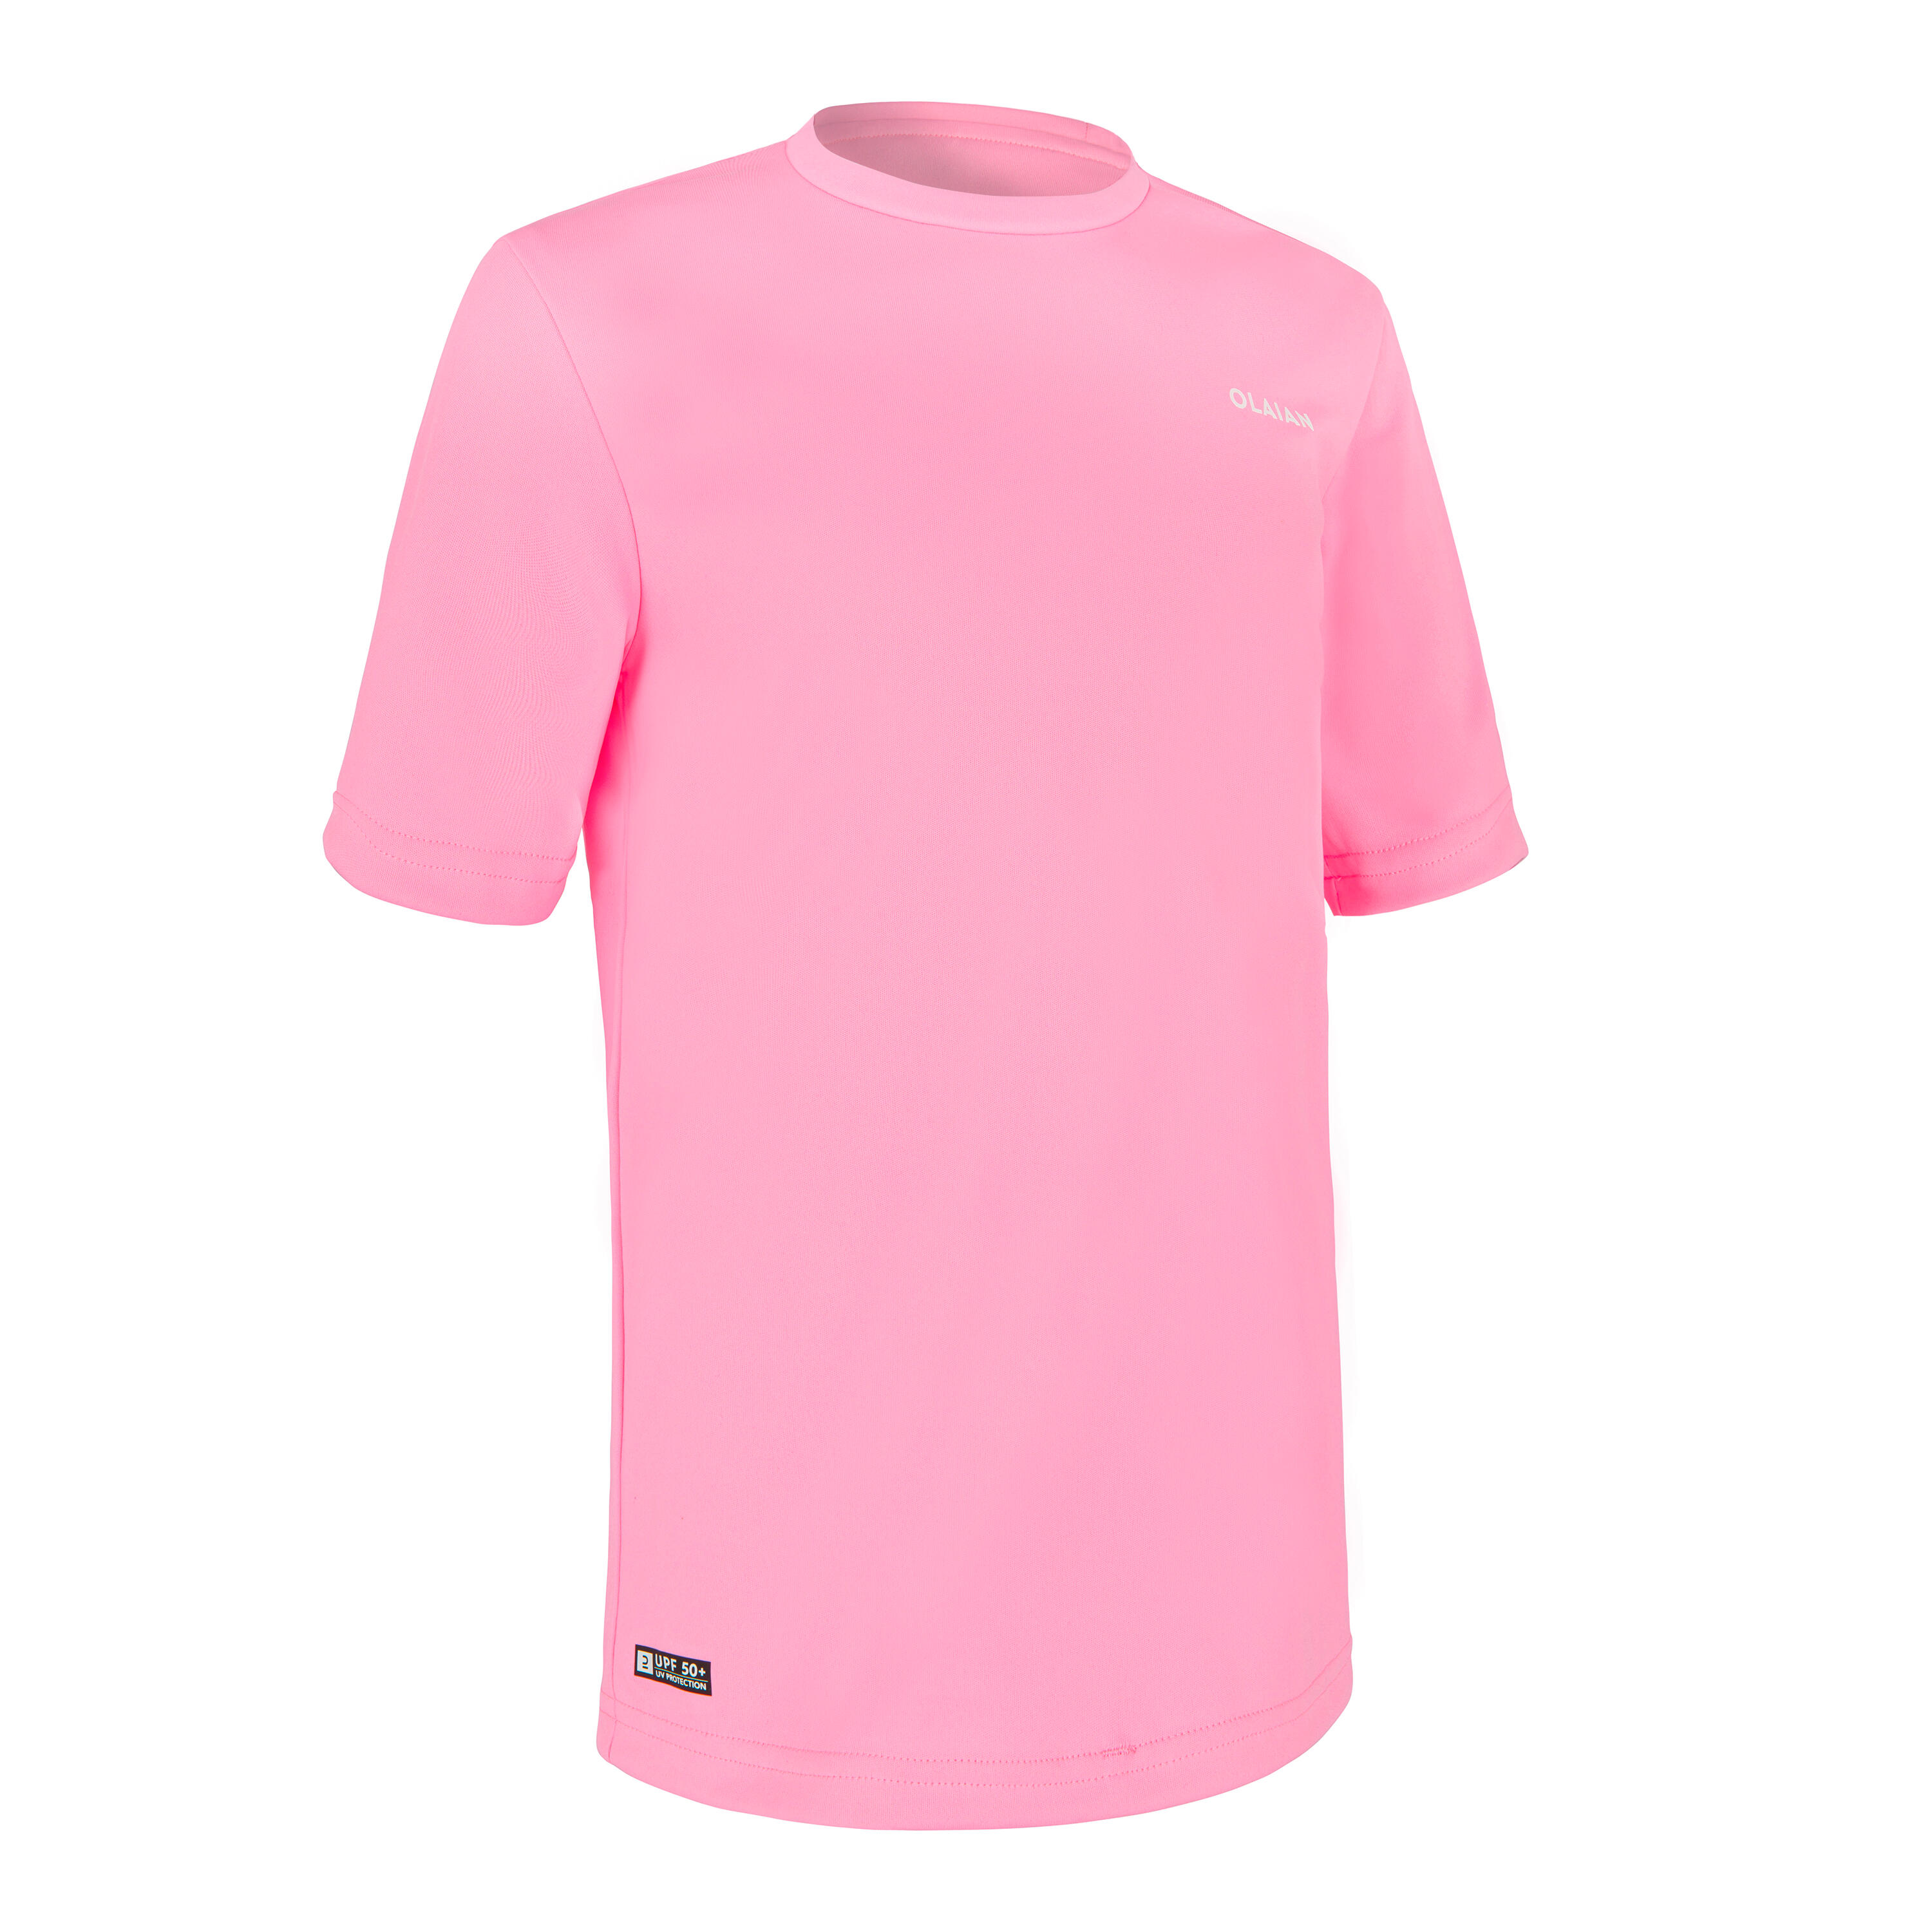 OLAIAN UV-Shirt Kinder UV-Schutz 50+ rosa 6 Jahre - Gr. 116